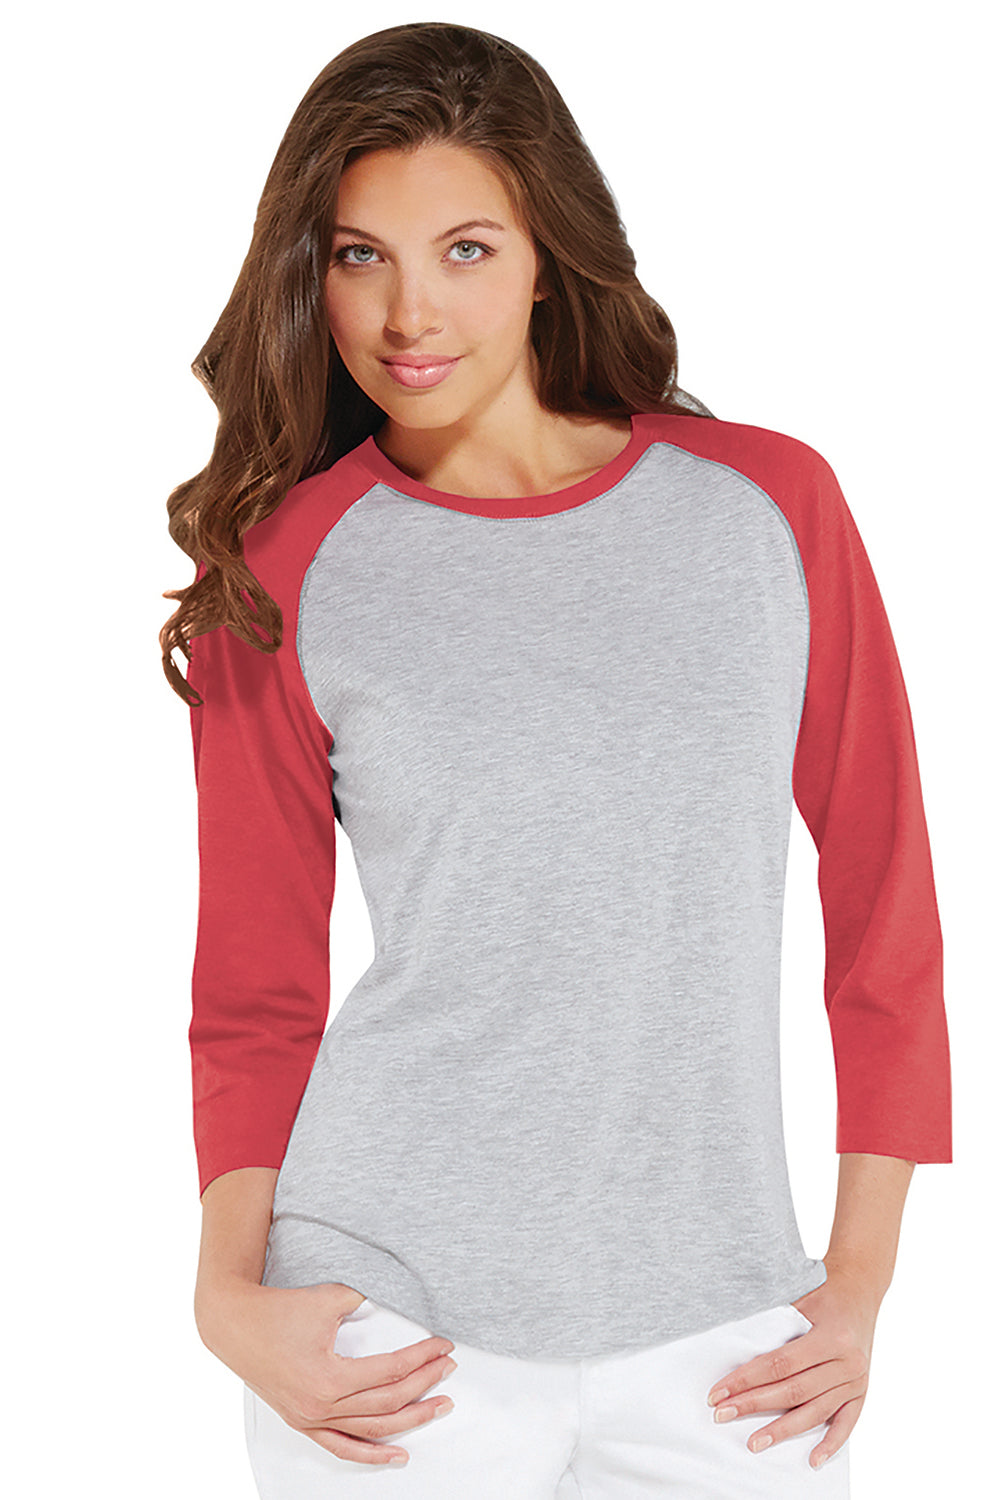 LAT LA3530 Womens Fine Jersey 3/4 Sleeve Crewneck T-Shirt Heather Grey/Red Front